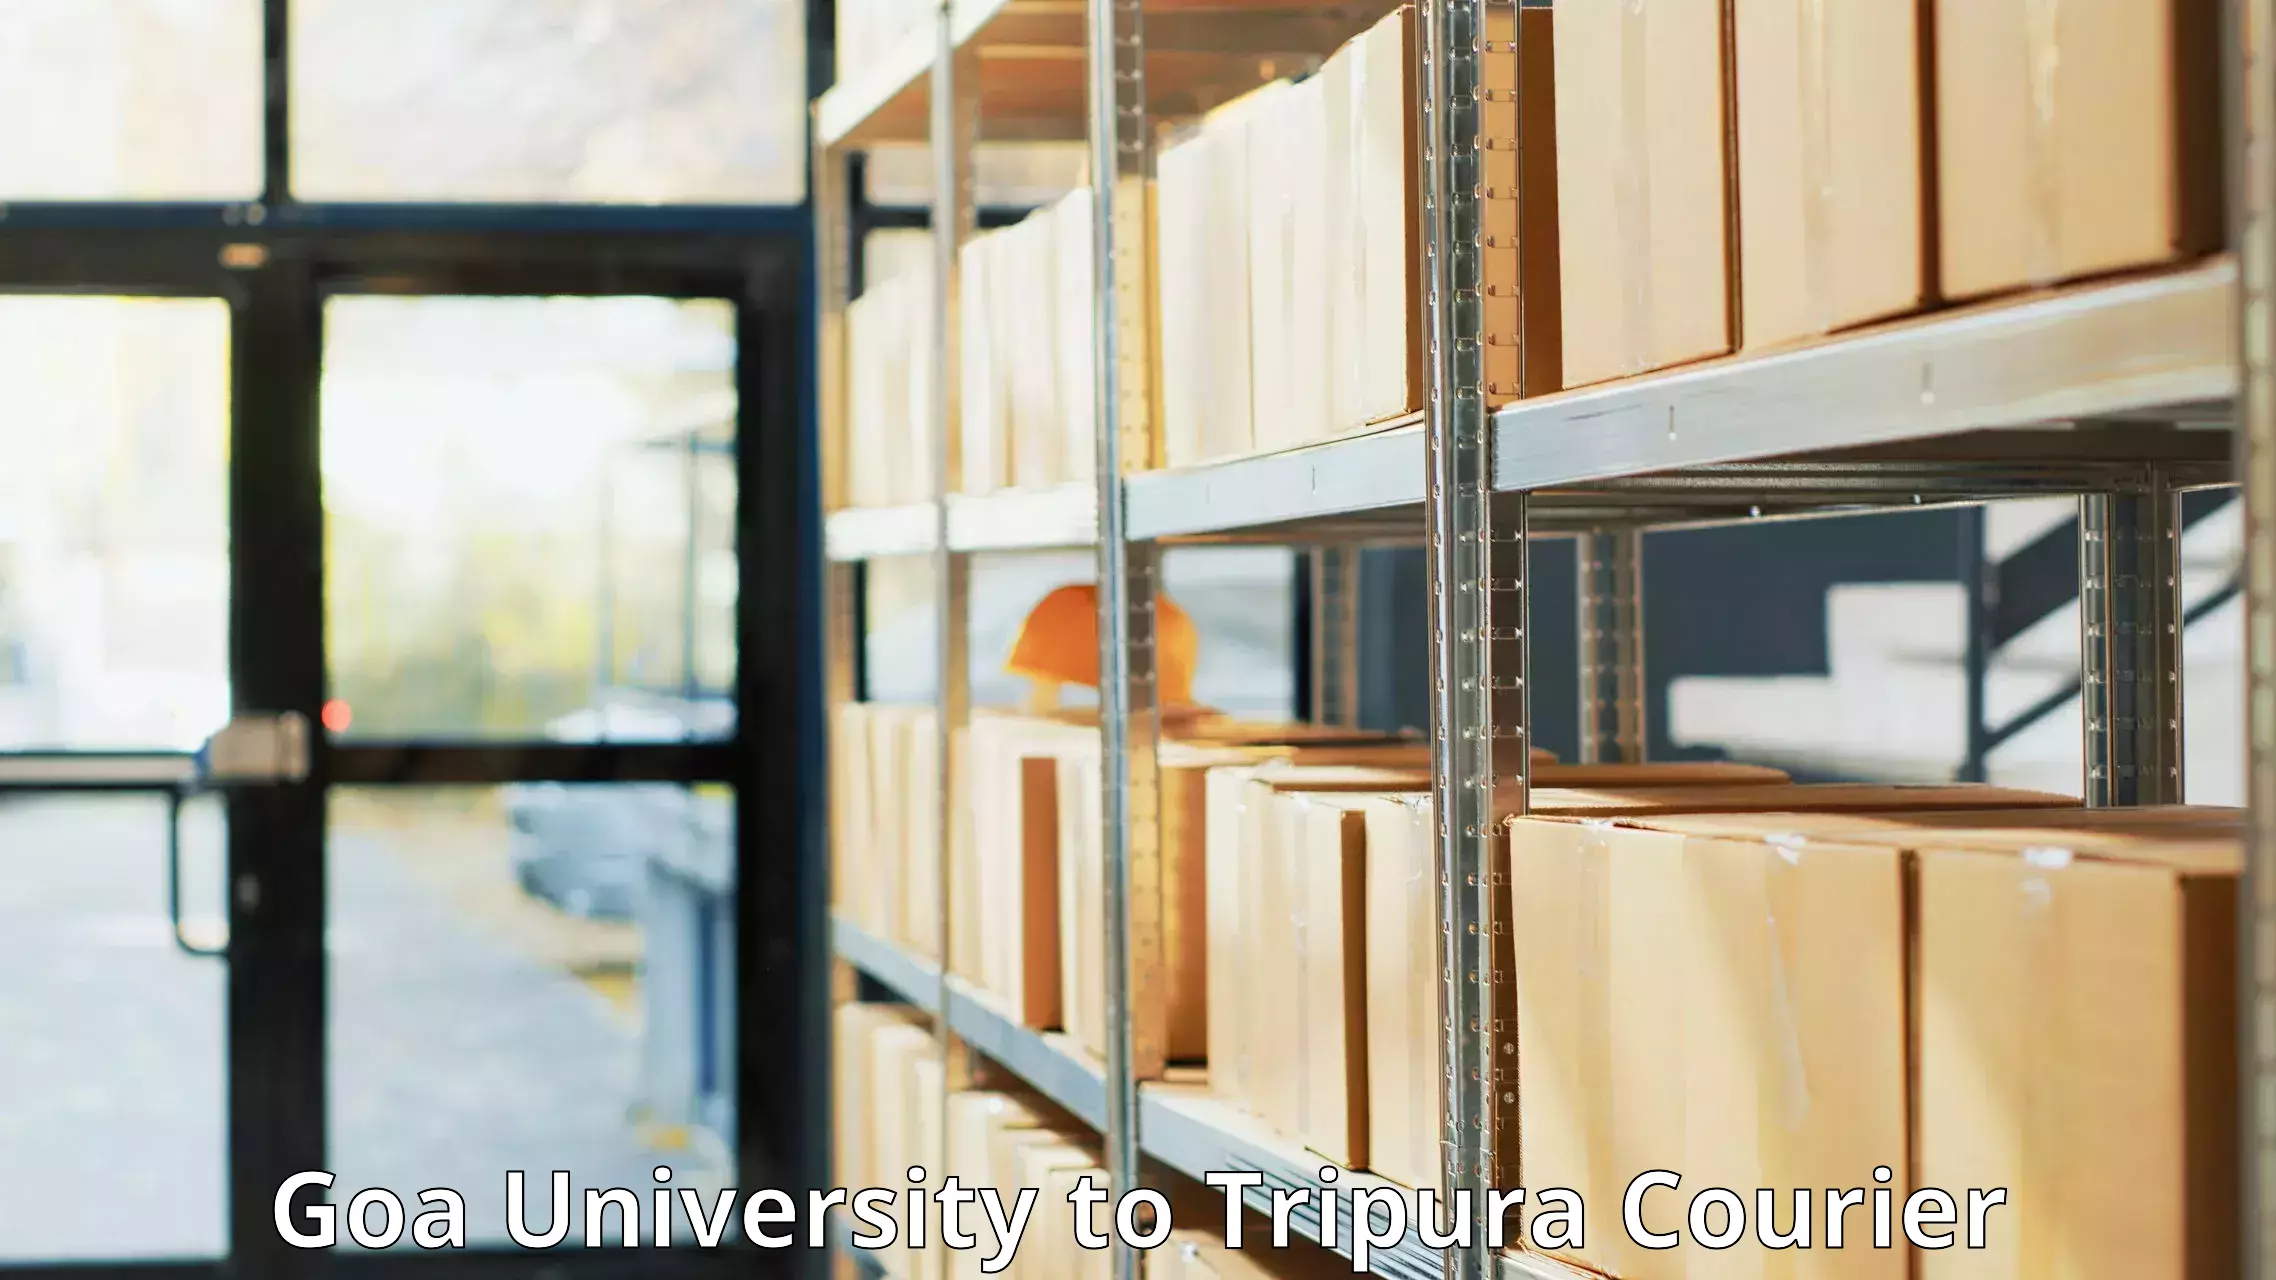 Courier service partnerships Goa University to Udaipur Tripura